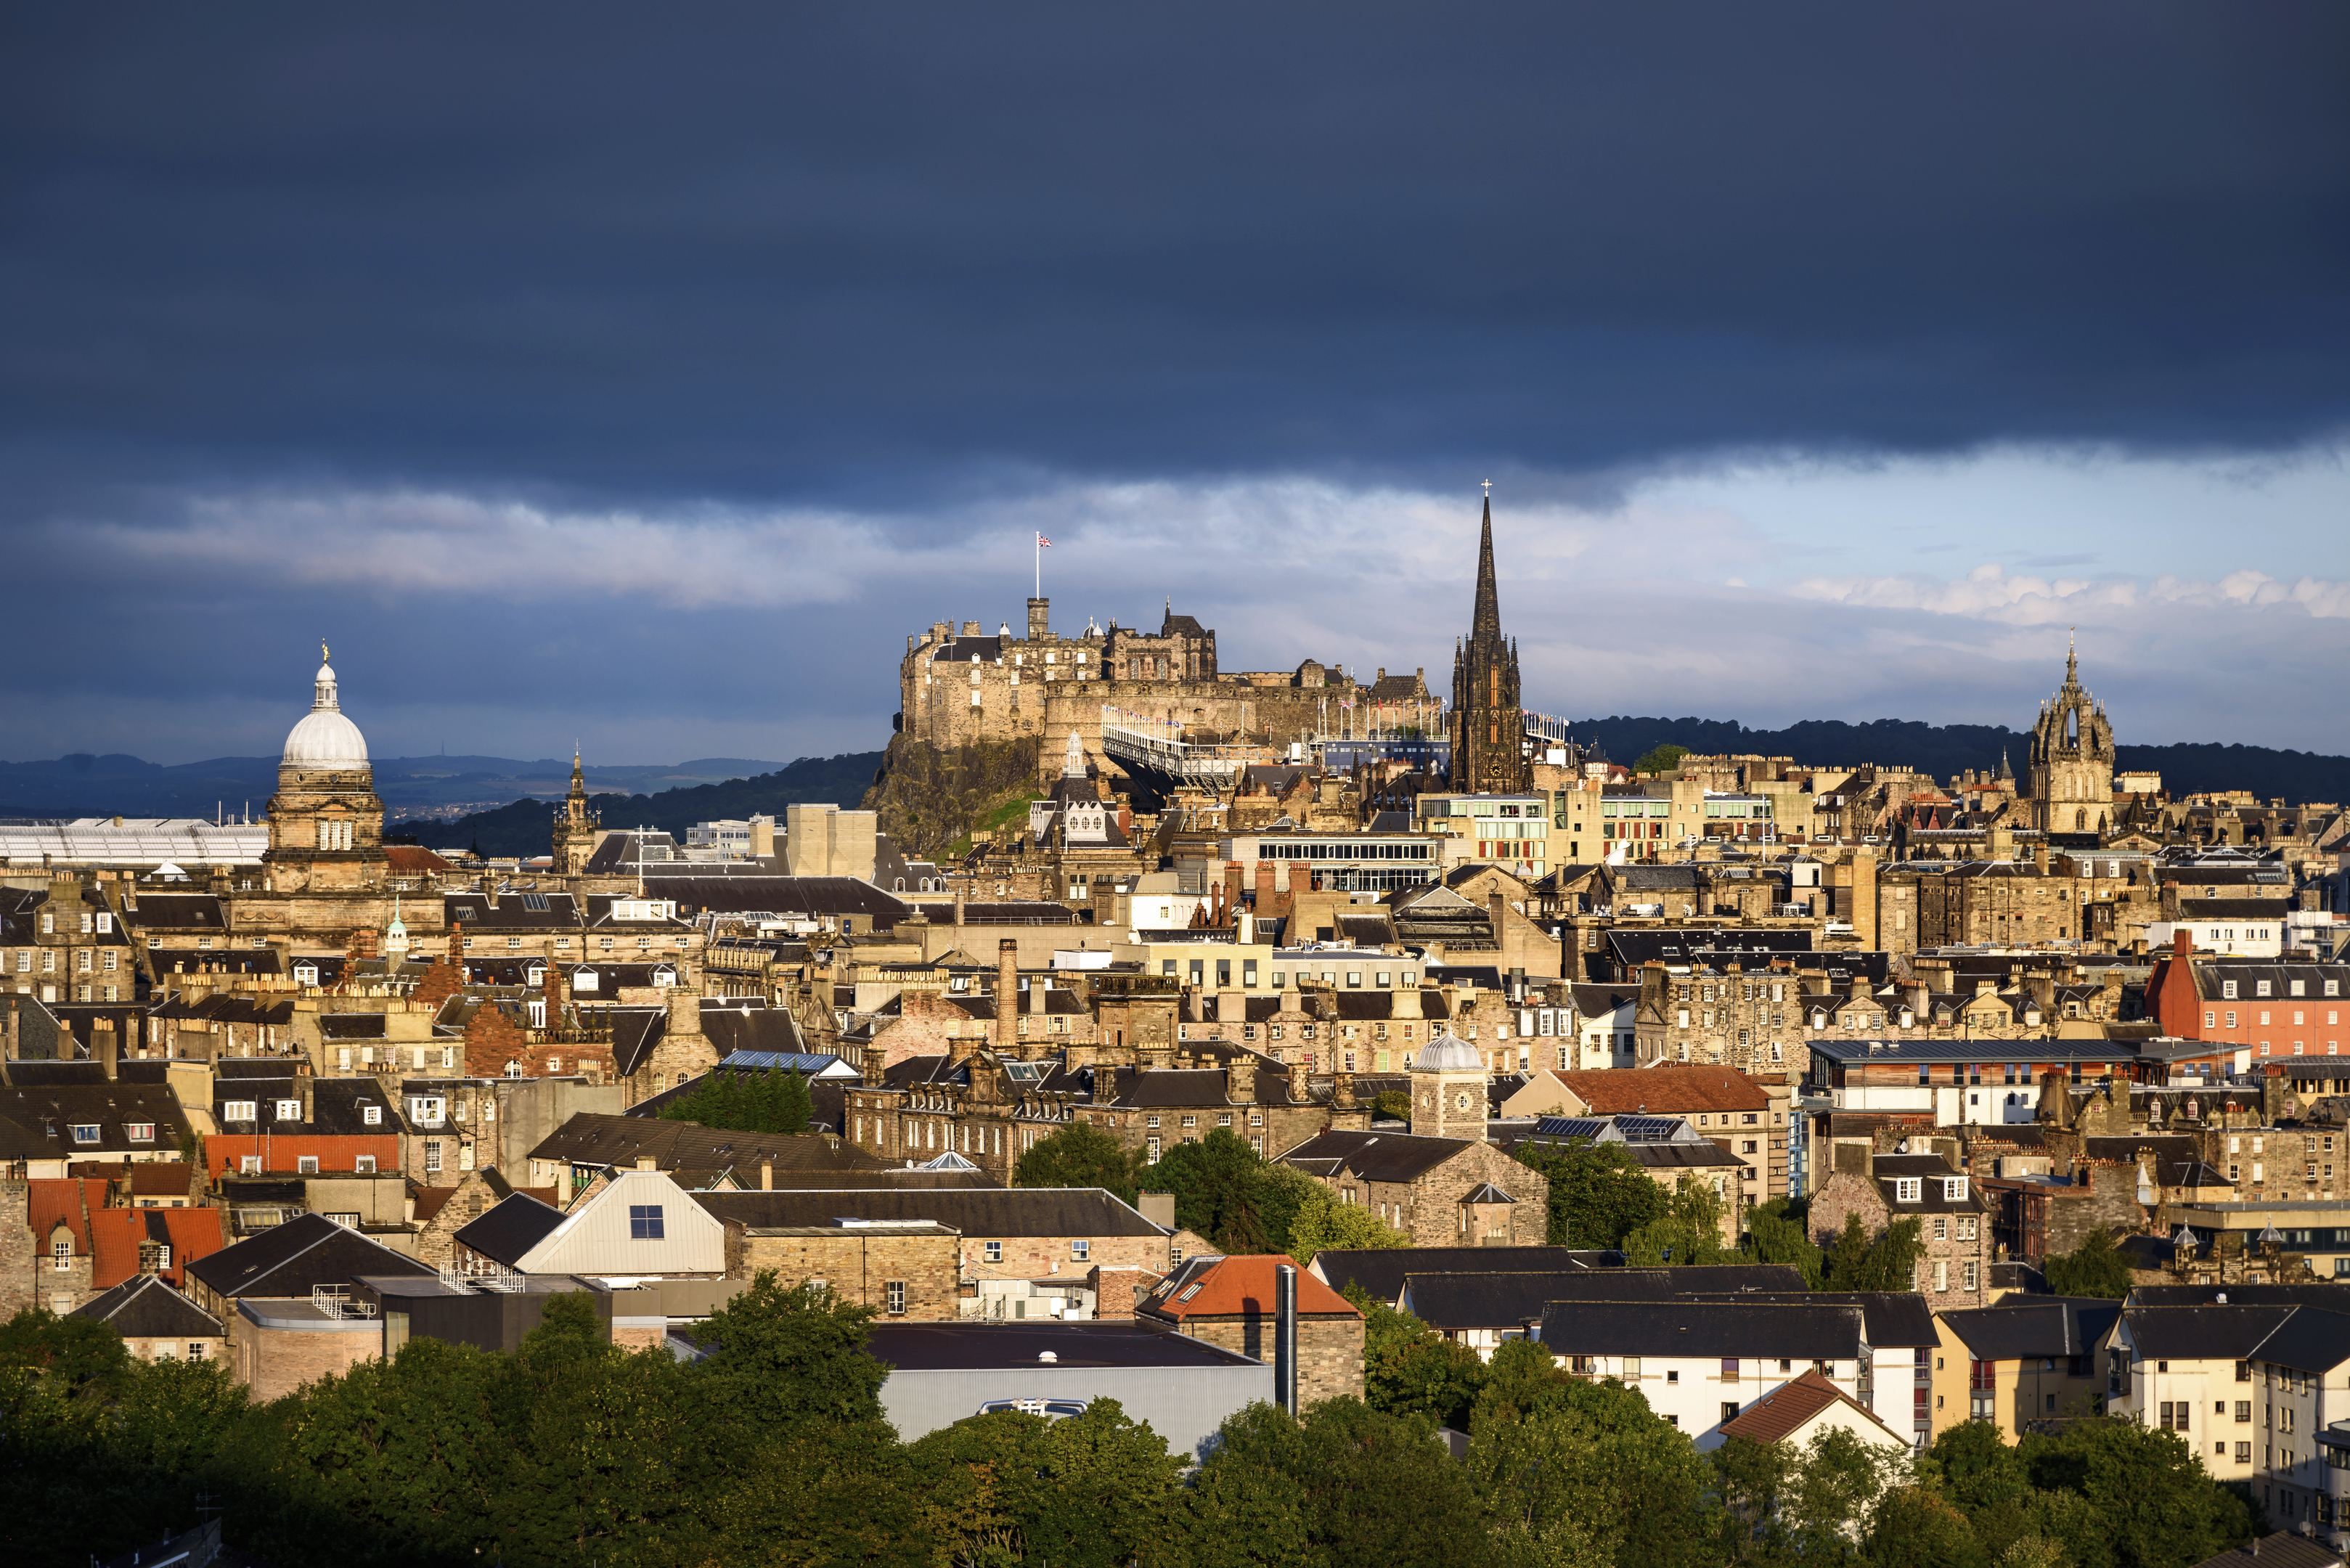 Edinburgh (Getty Images)